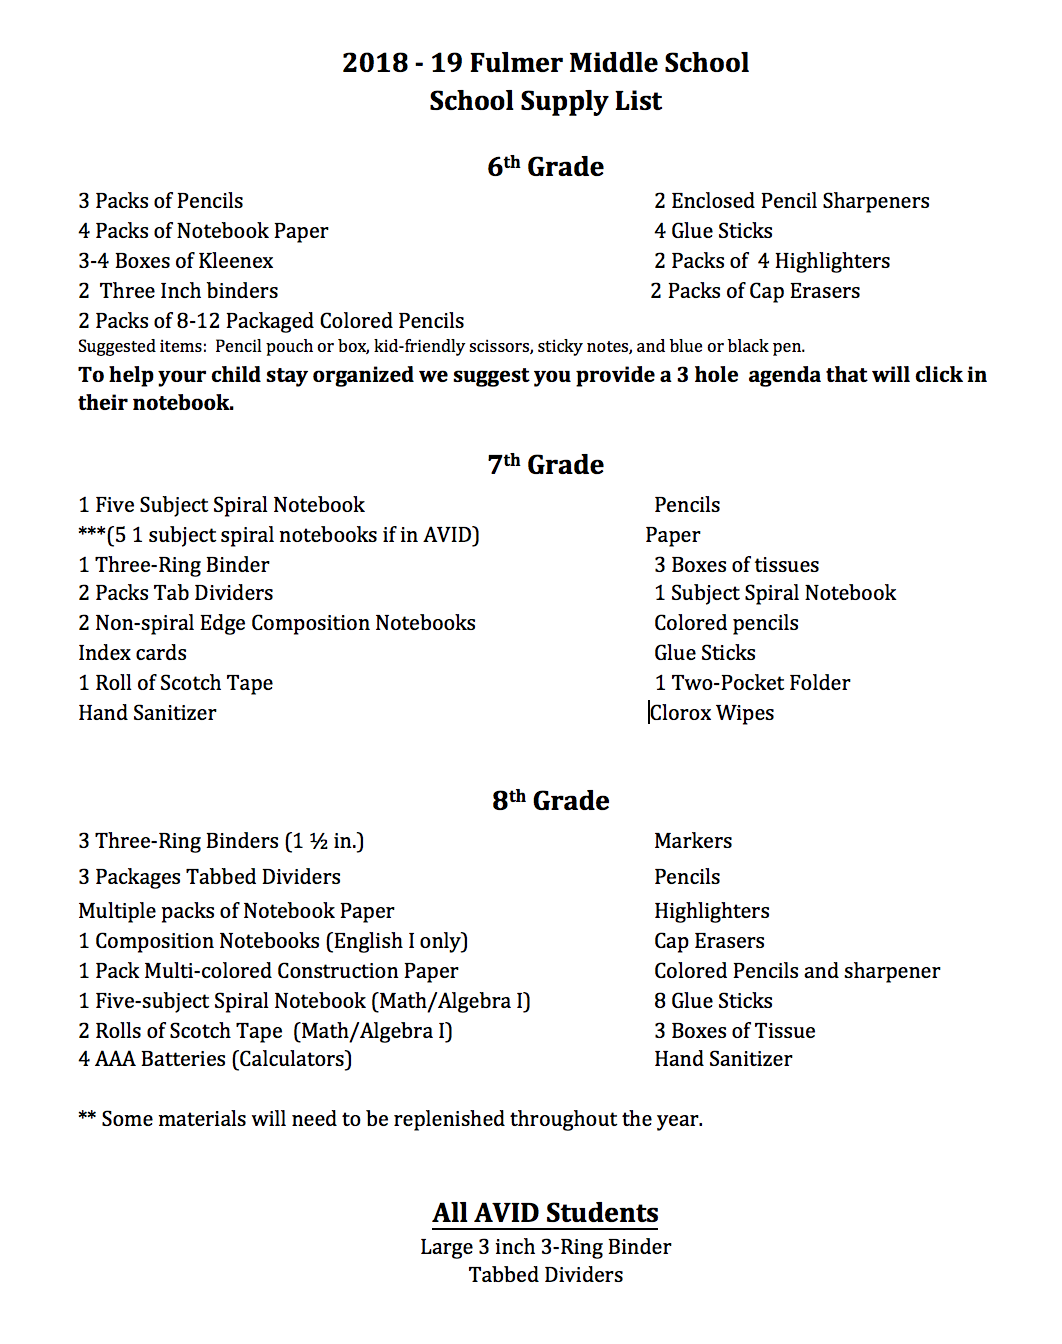 School Supply List